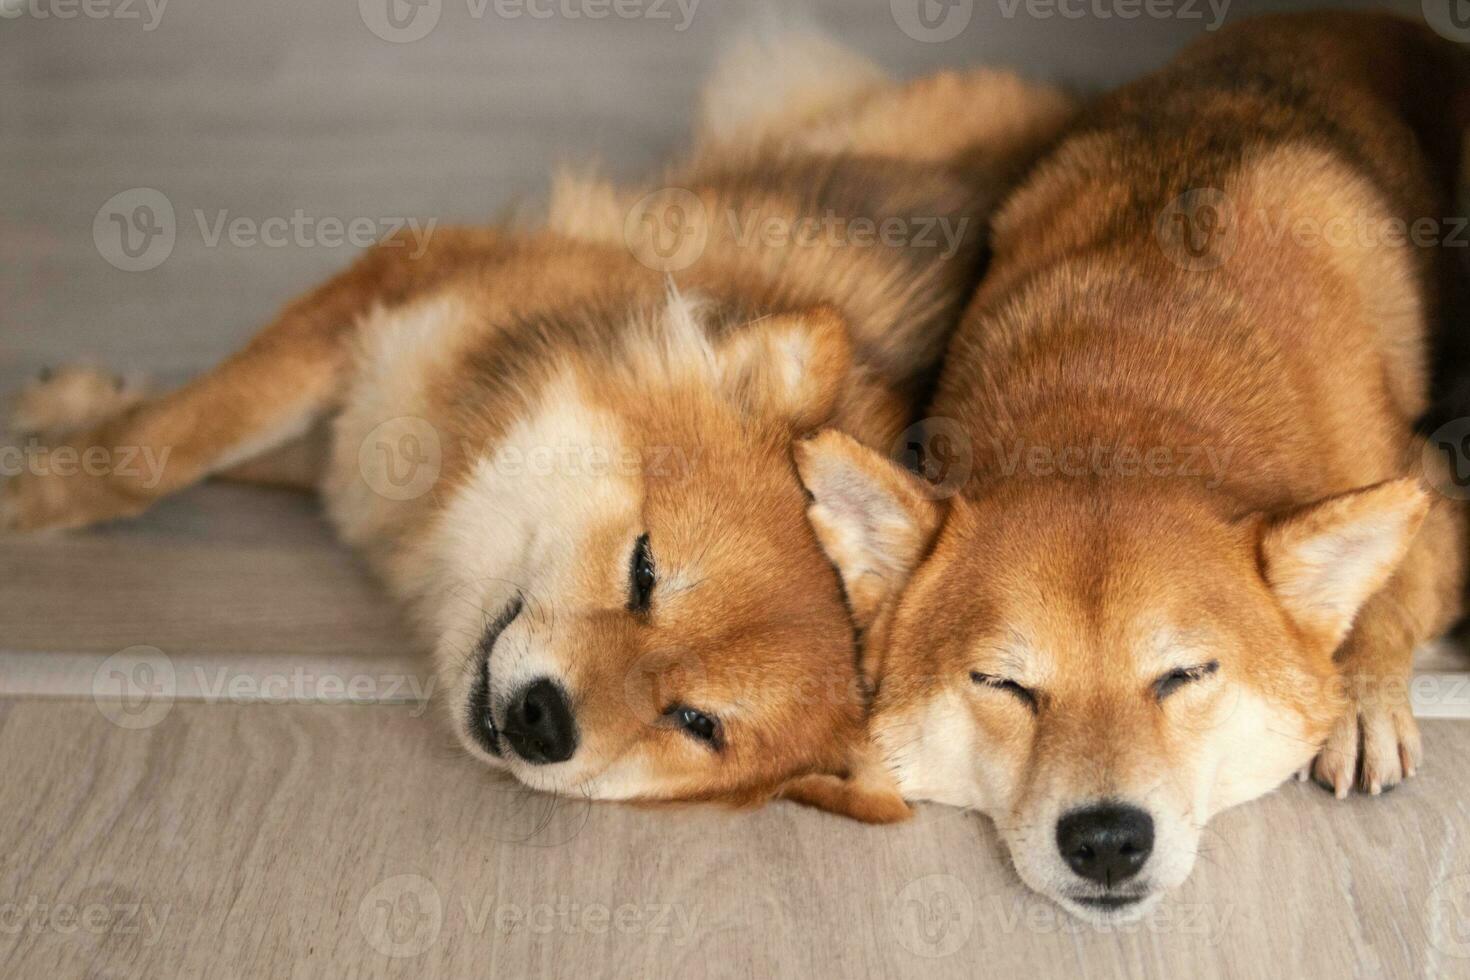 twee shiba inu honden slaap samen. pluizig Japans honden foto